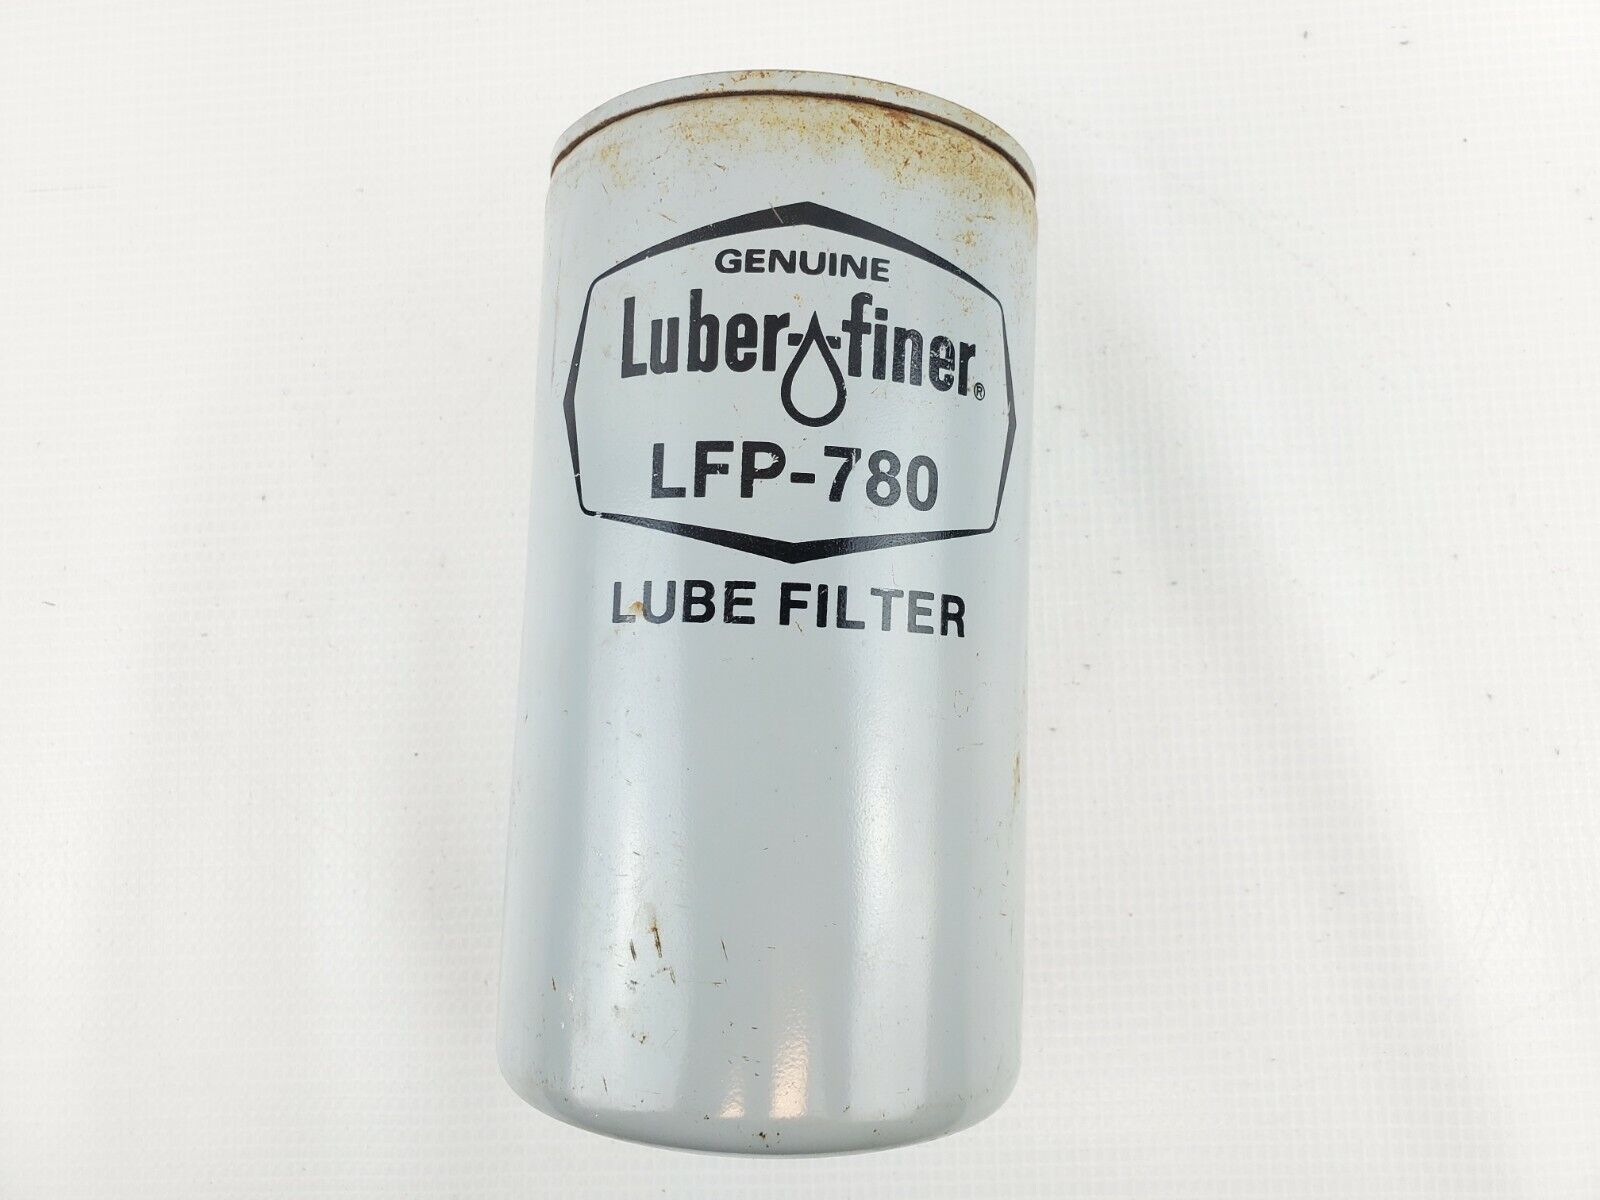 NOS Luberfiner LFP780 Lube Filter LFP-780 57620 L45335 LF608 LF3972 P559310